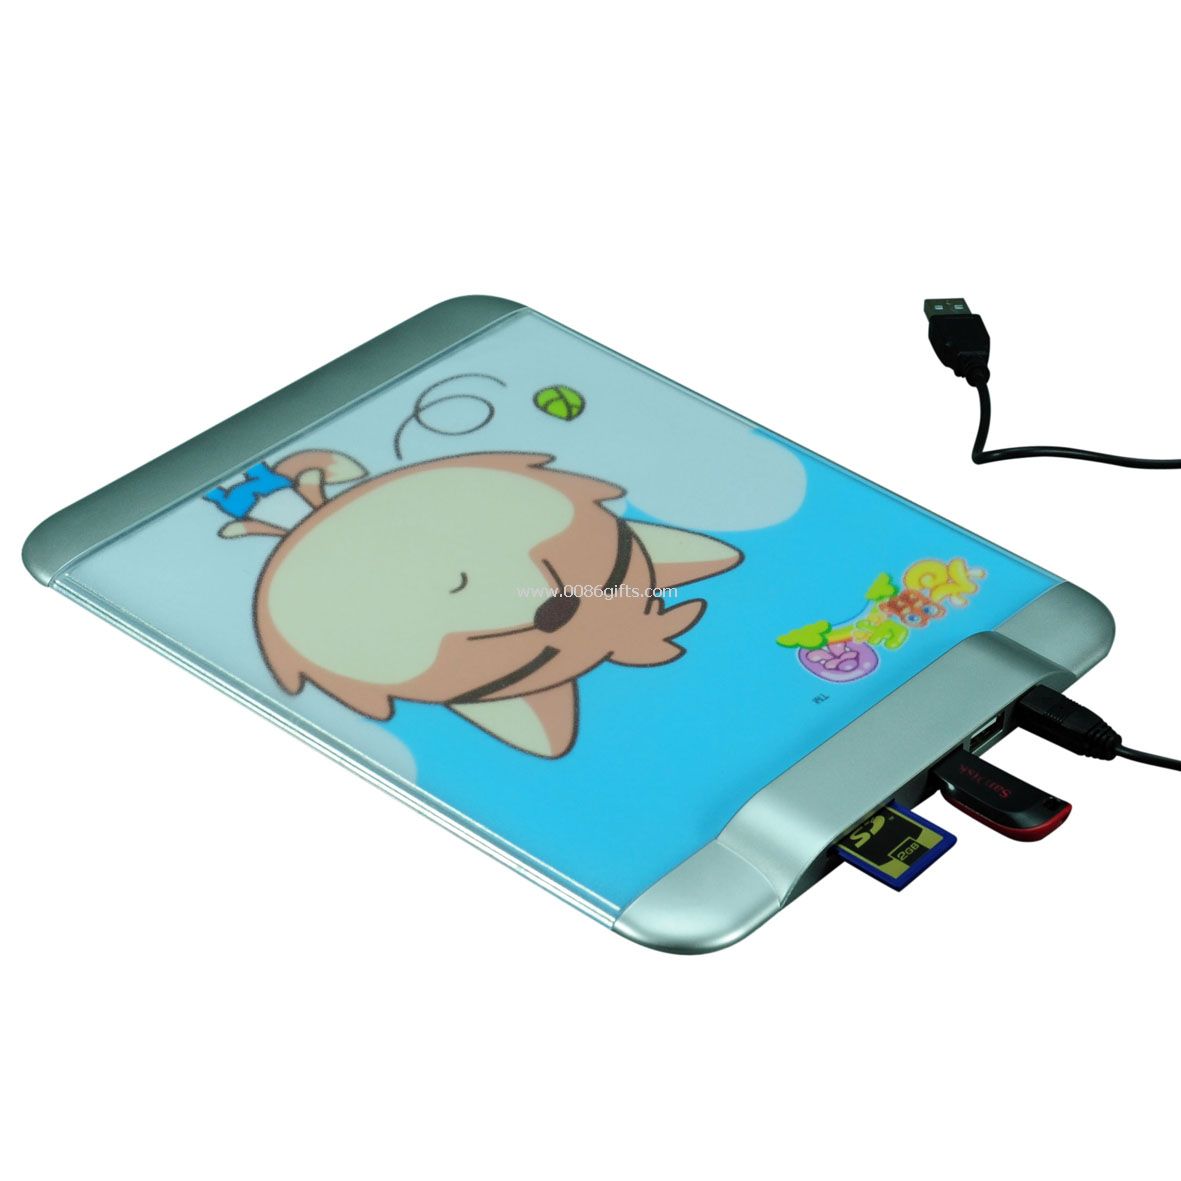 SD/USB Hub mouse pad